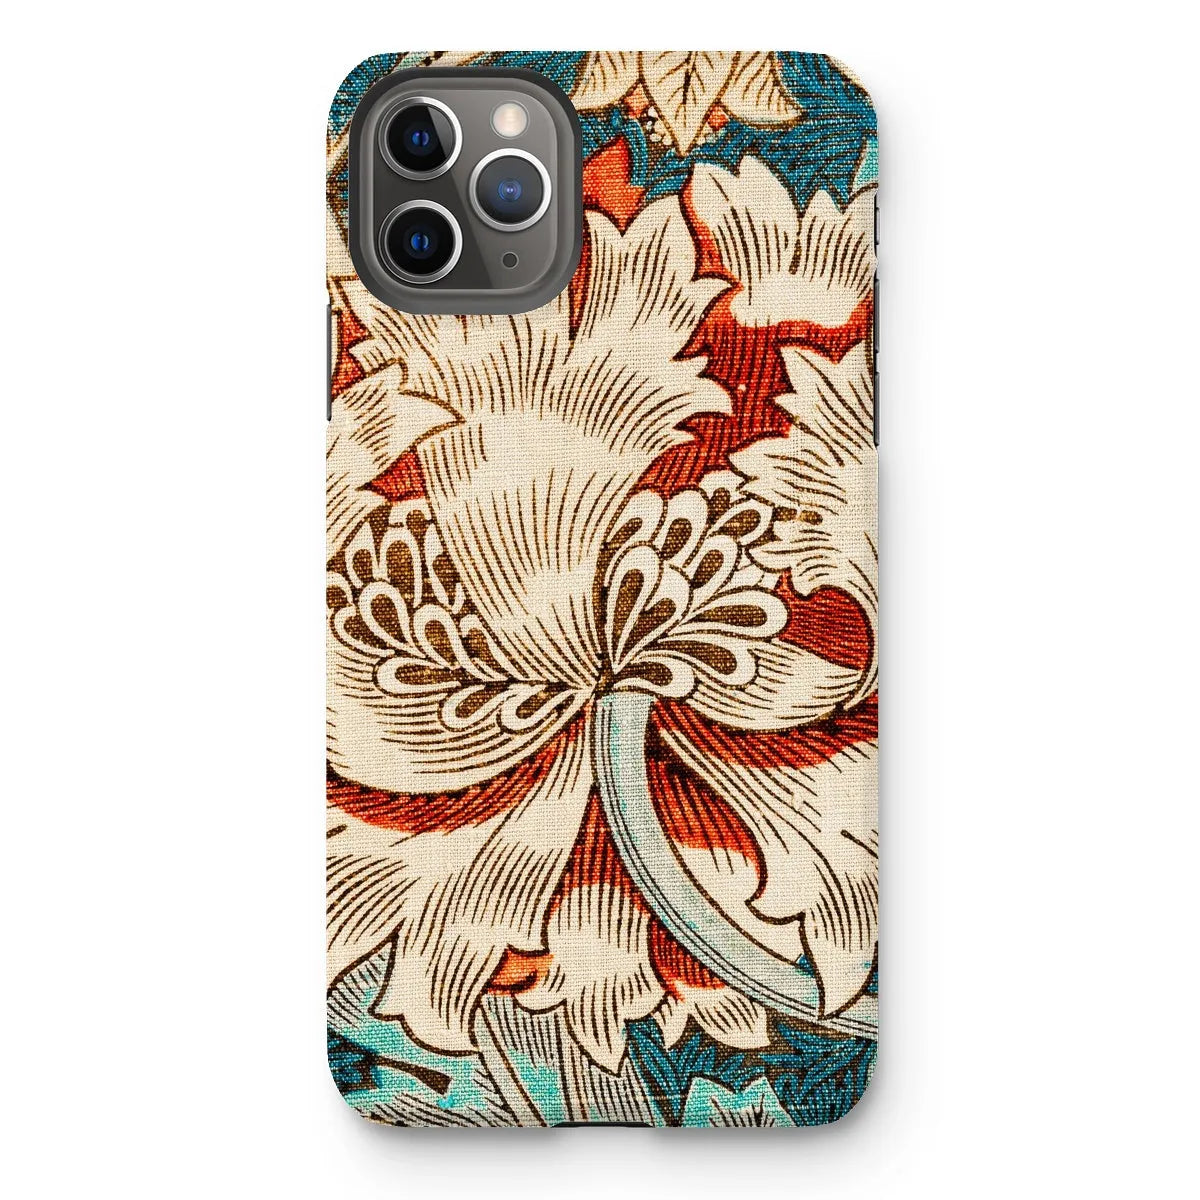 Honeysuckle Too By William Morris Phone Case - Iphone 11 Pro Max / Matte - Mobile Phone Cases - Aesthetic Art